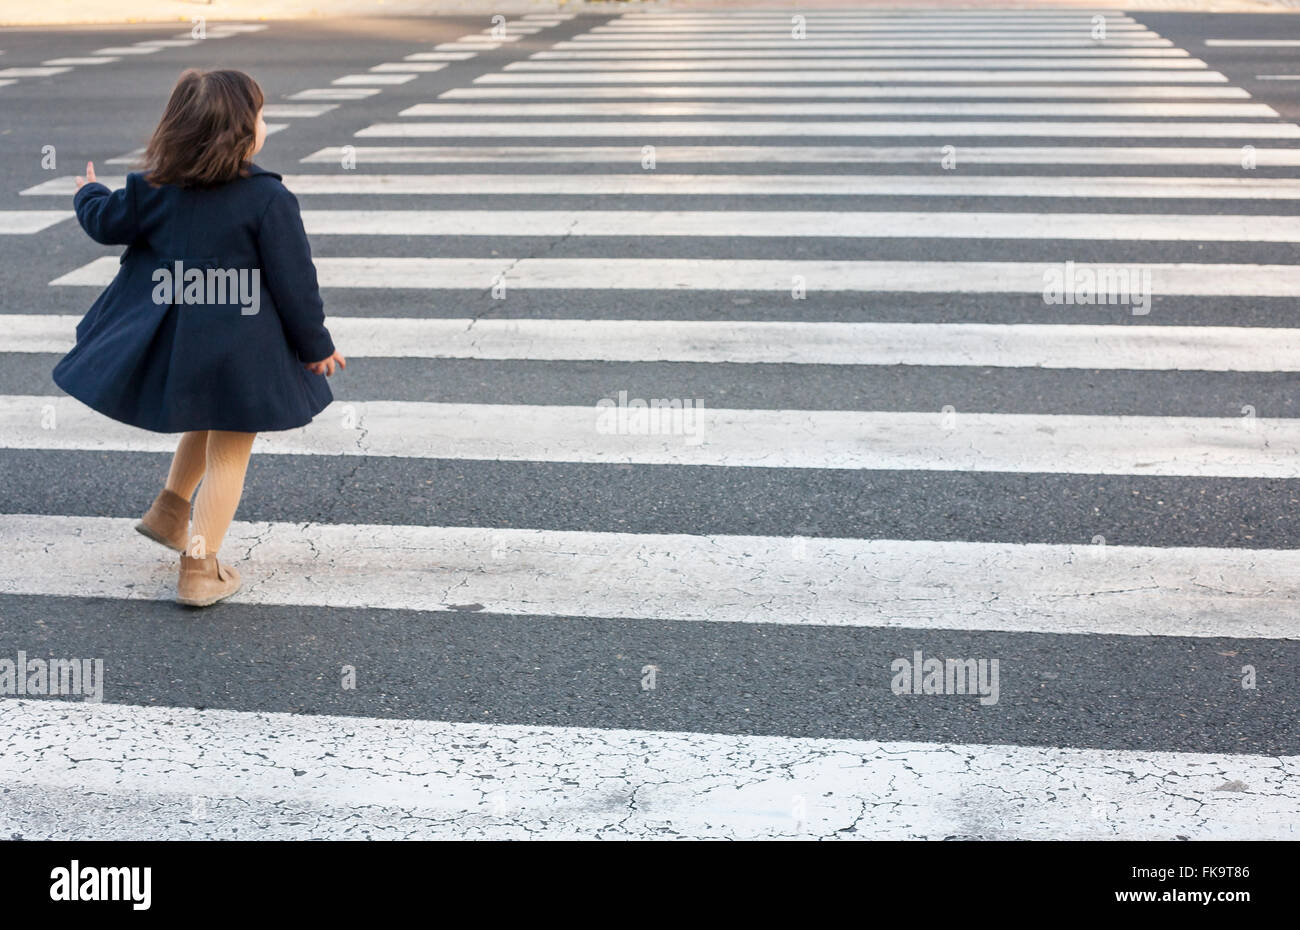 Little girl running and crossing alone a crosswalk. Dangerous behavior Stock Photo